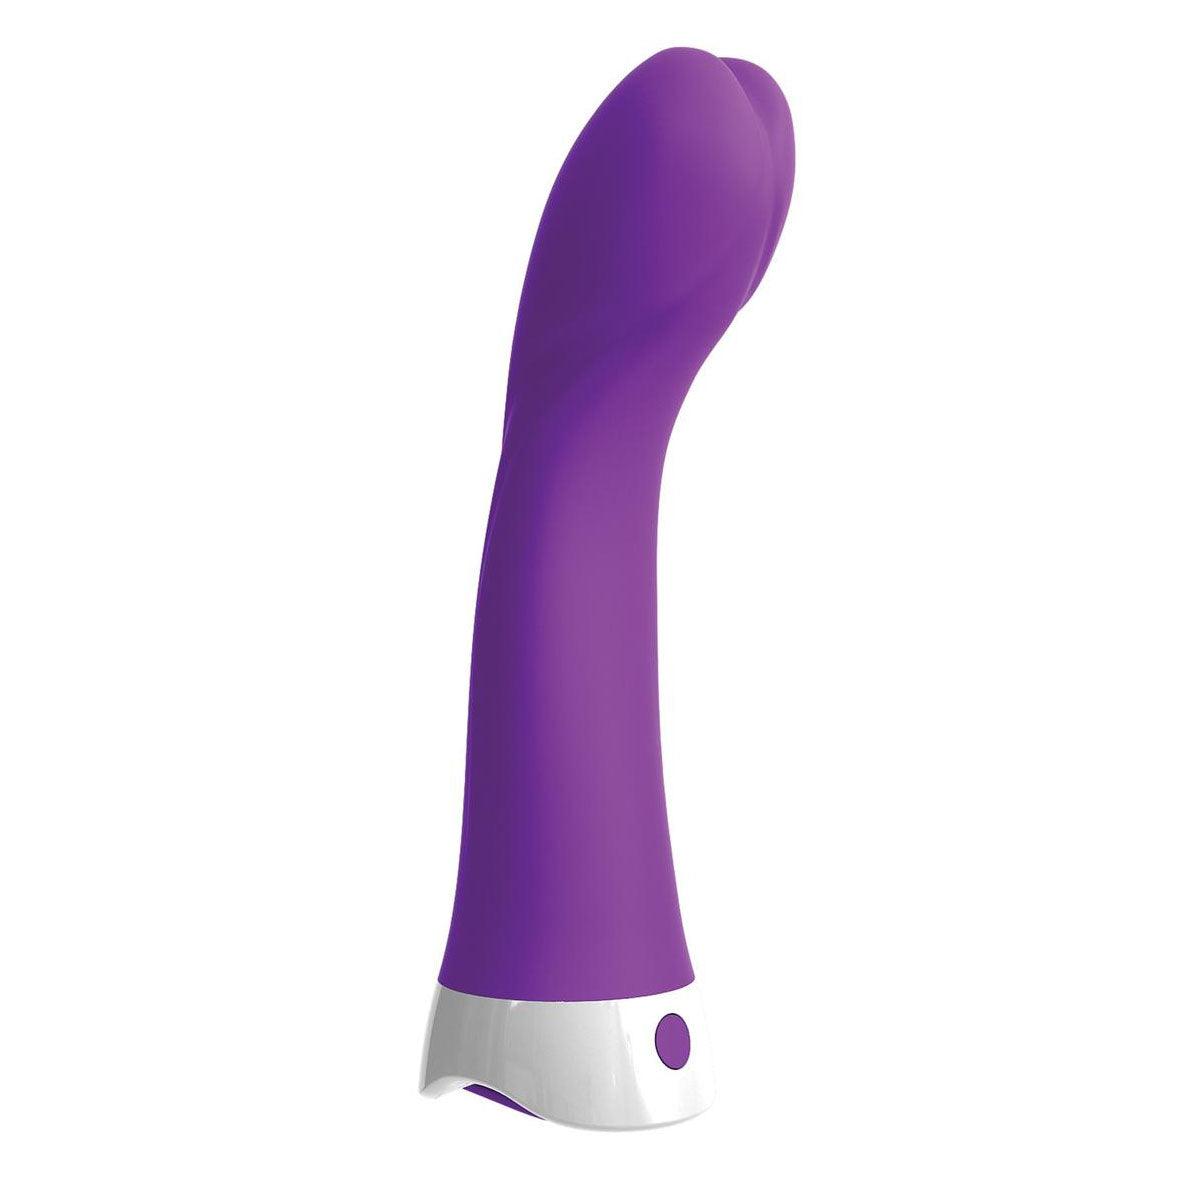 3Some Wall Banger G Vibe - Adult Planet - Online Sex Toys Shop UK